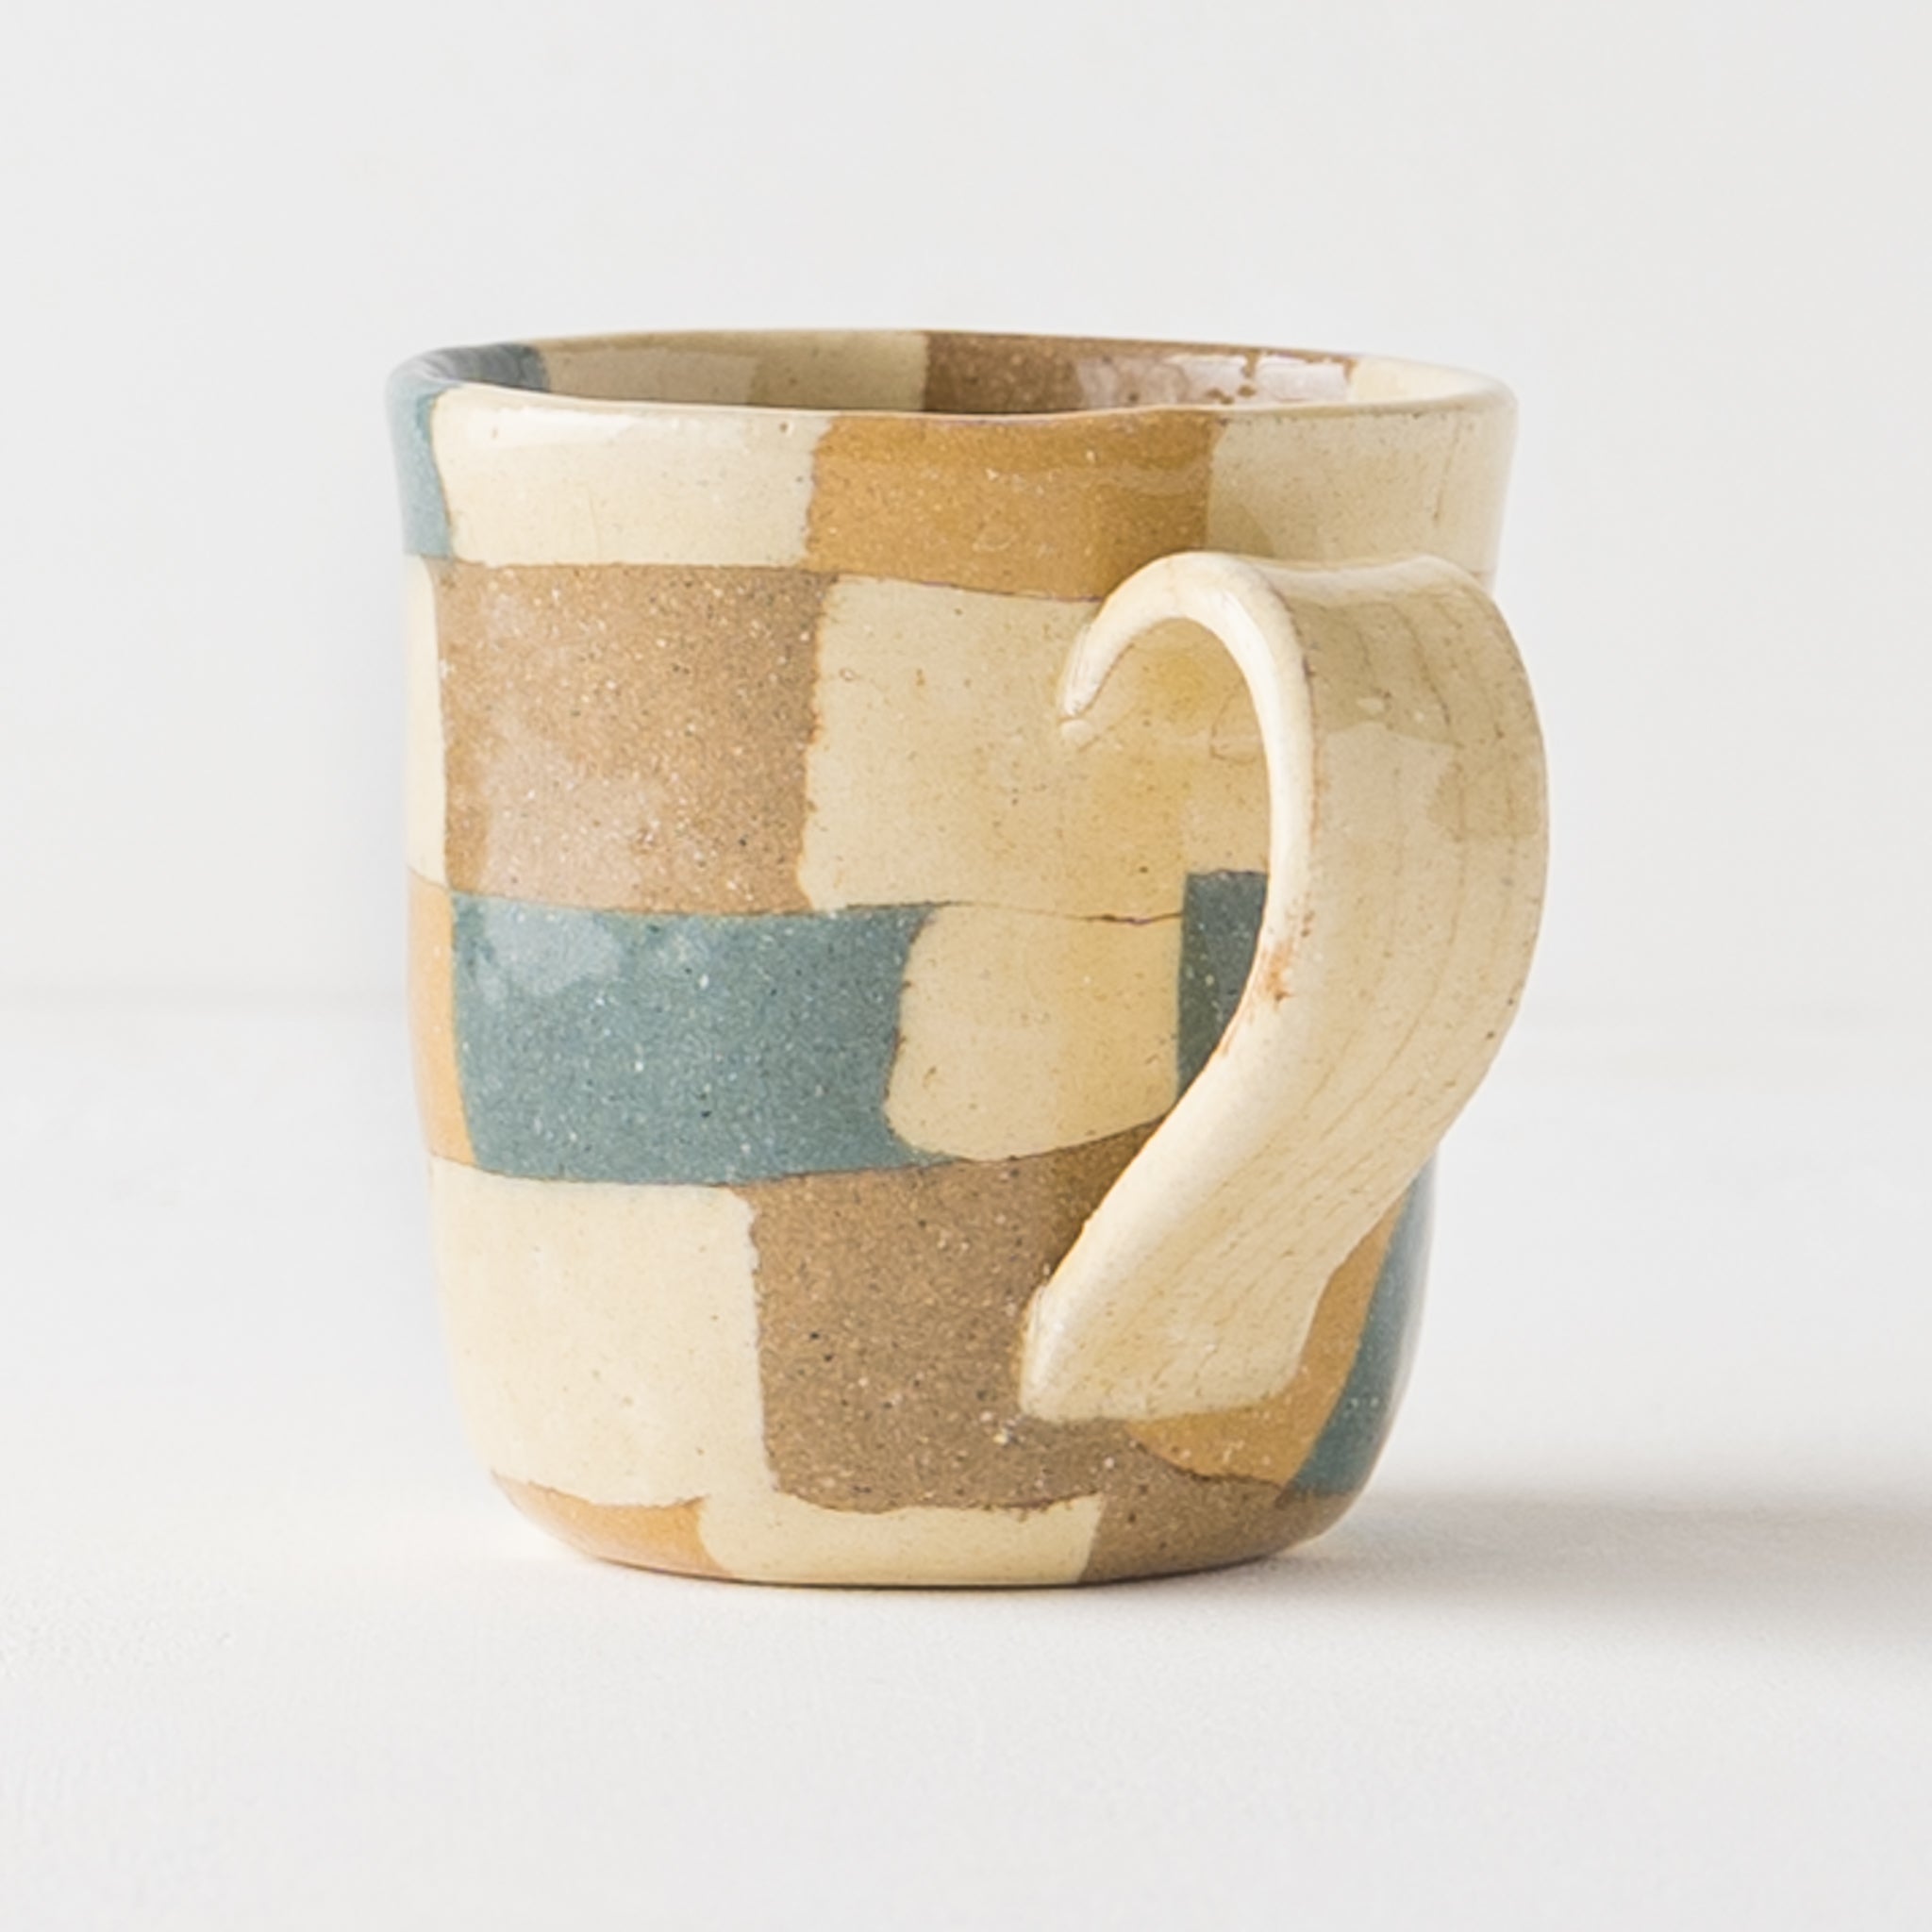 Mug made by Hanako Sakashita, whose block pattern is fashionable and cute.